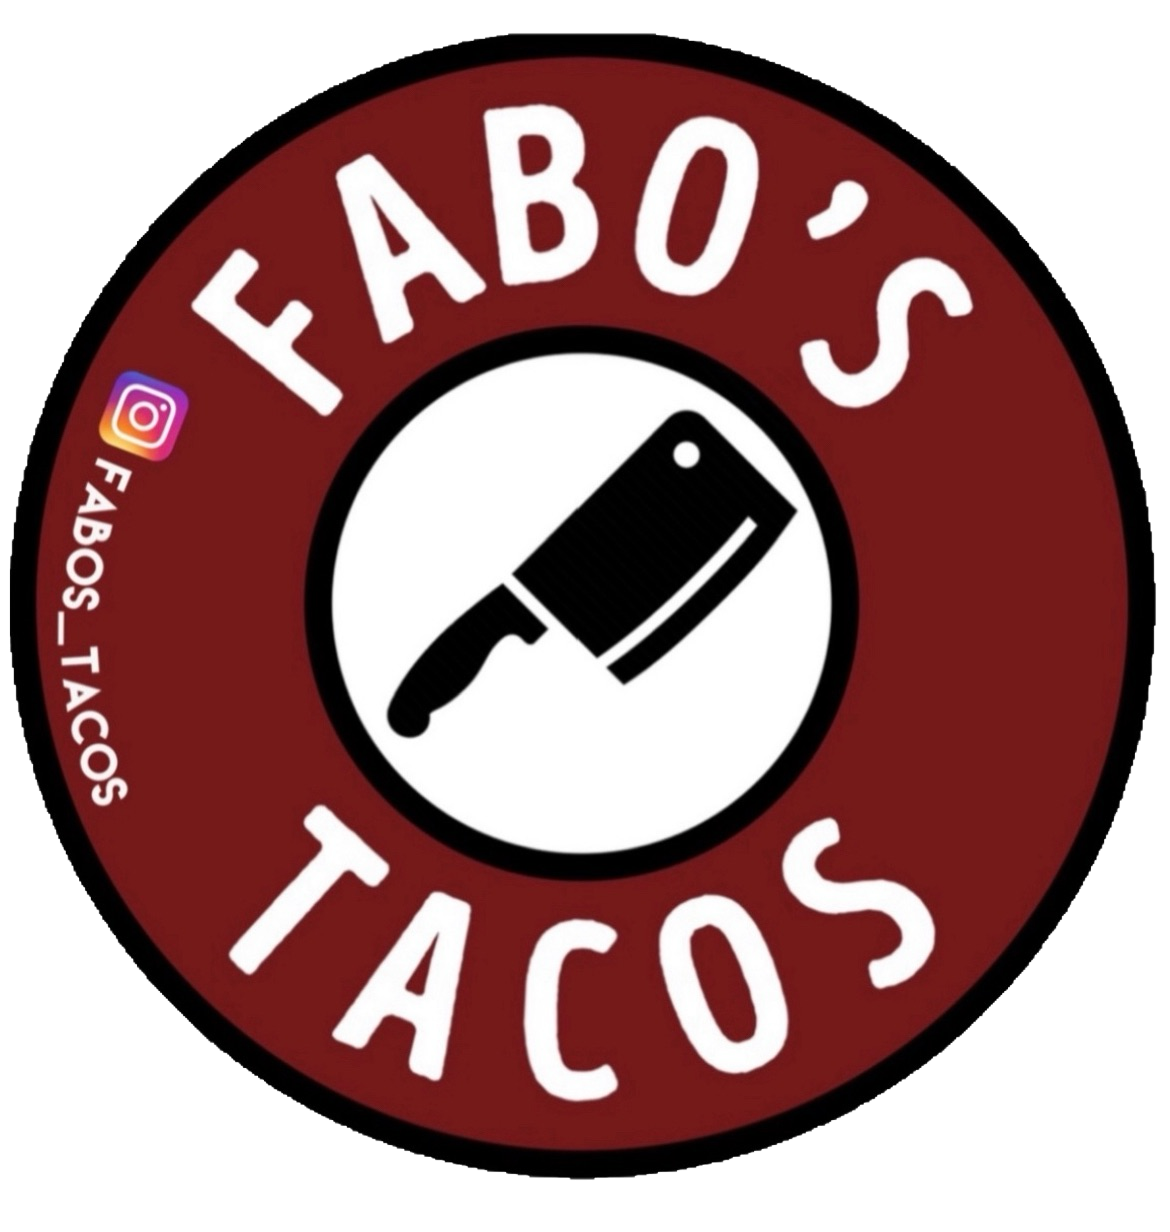 Fabo's Tacos logo